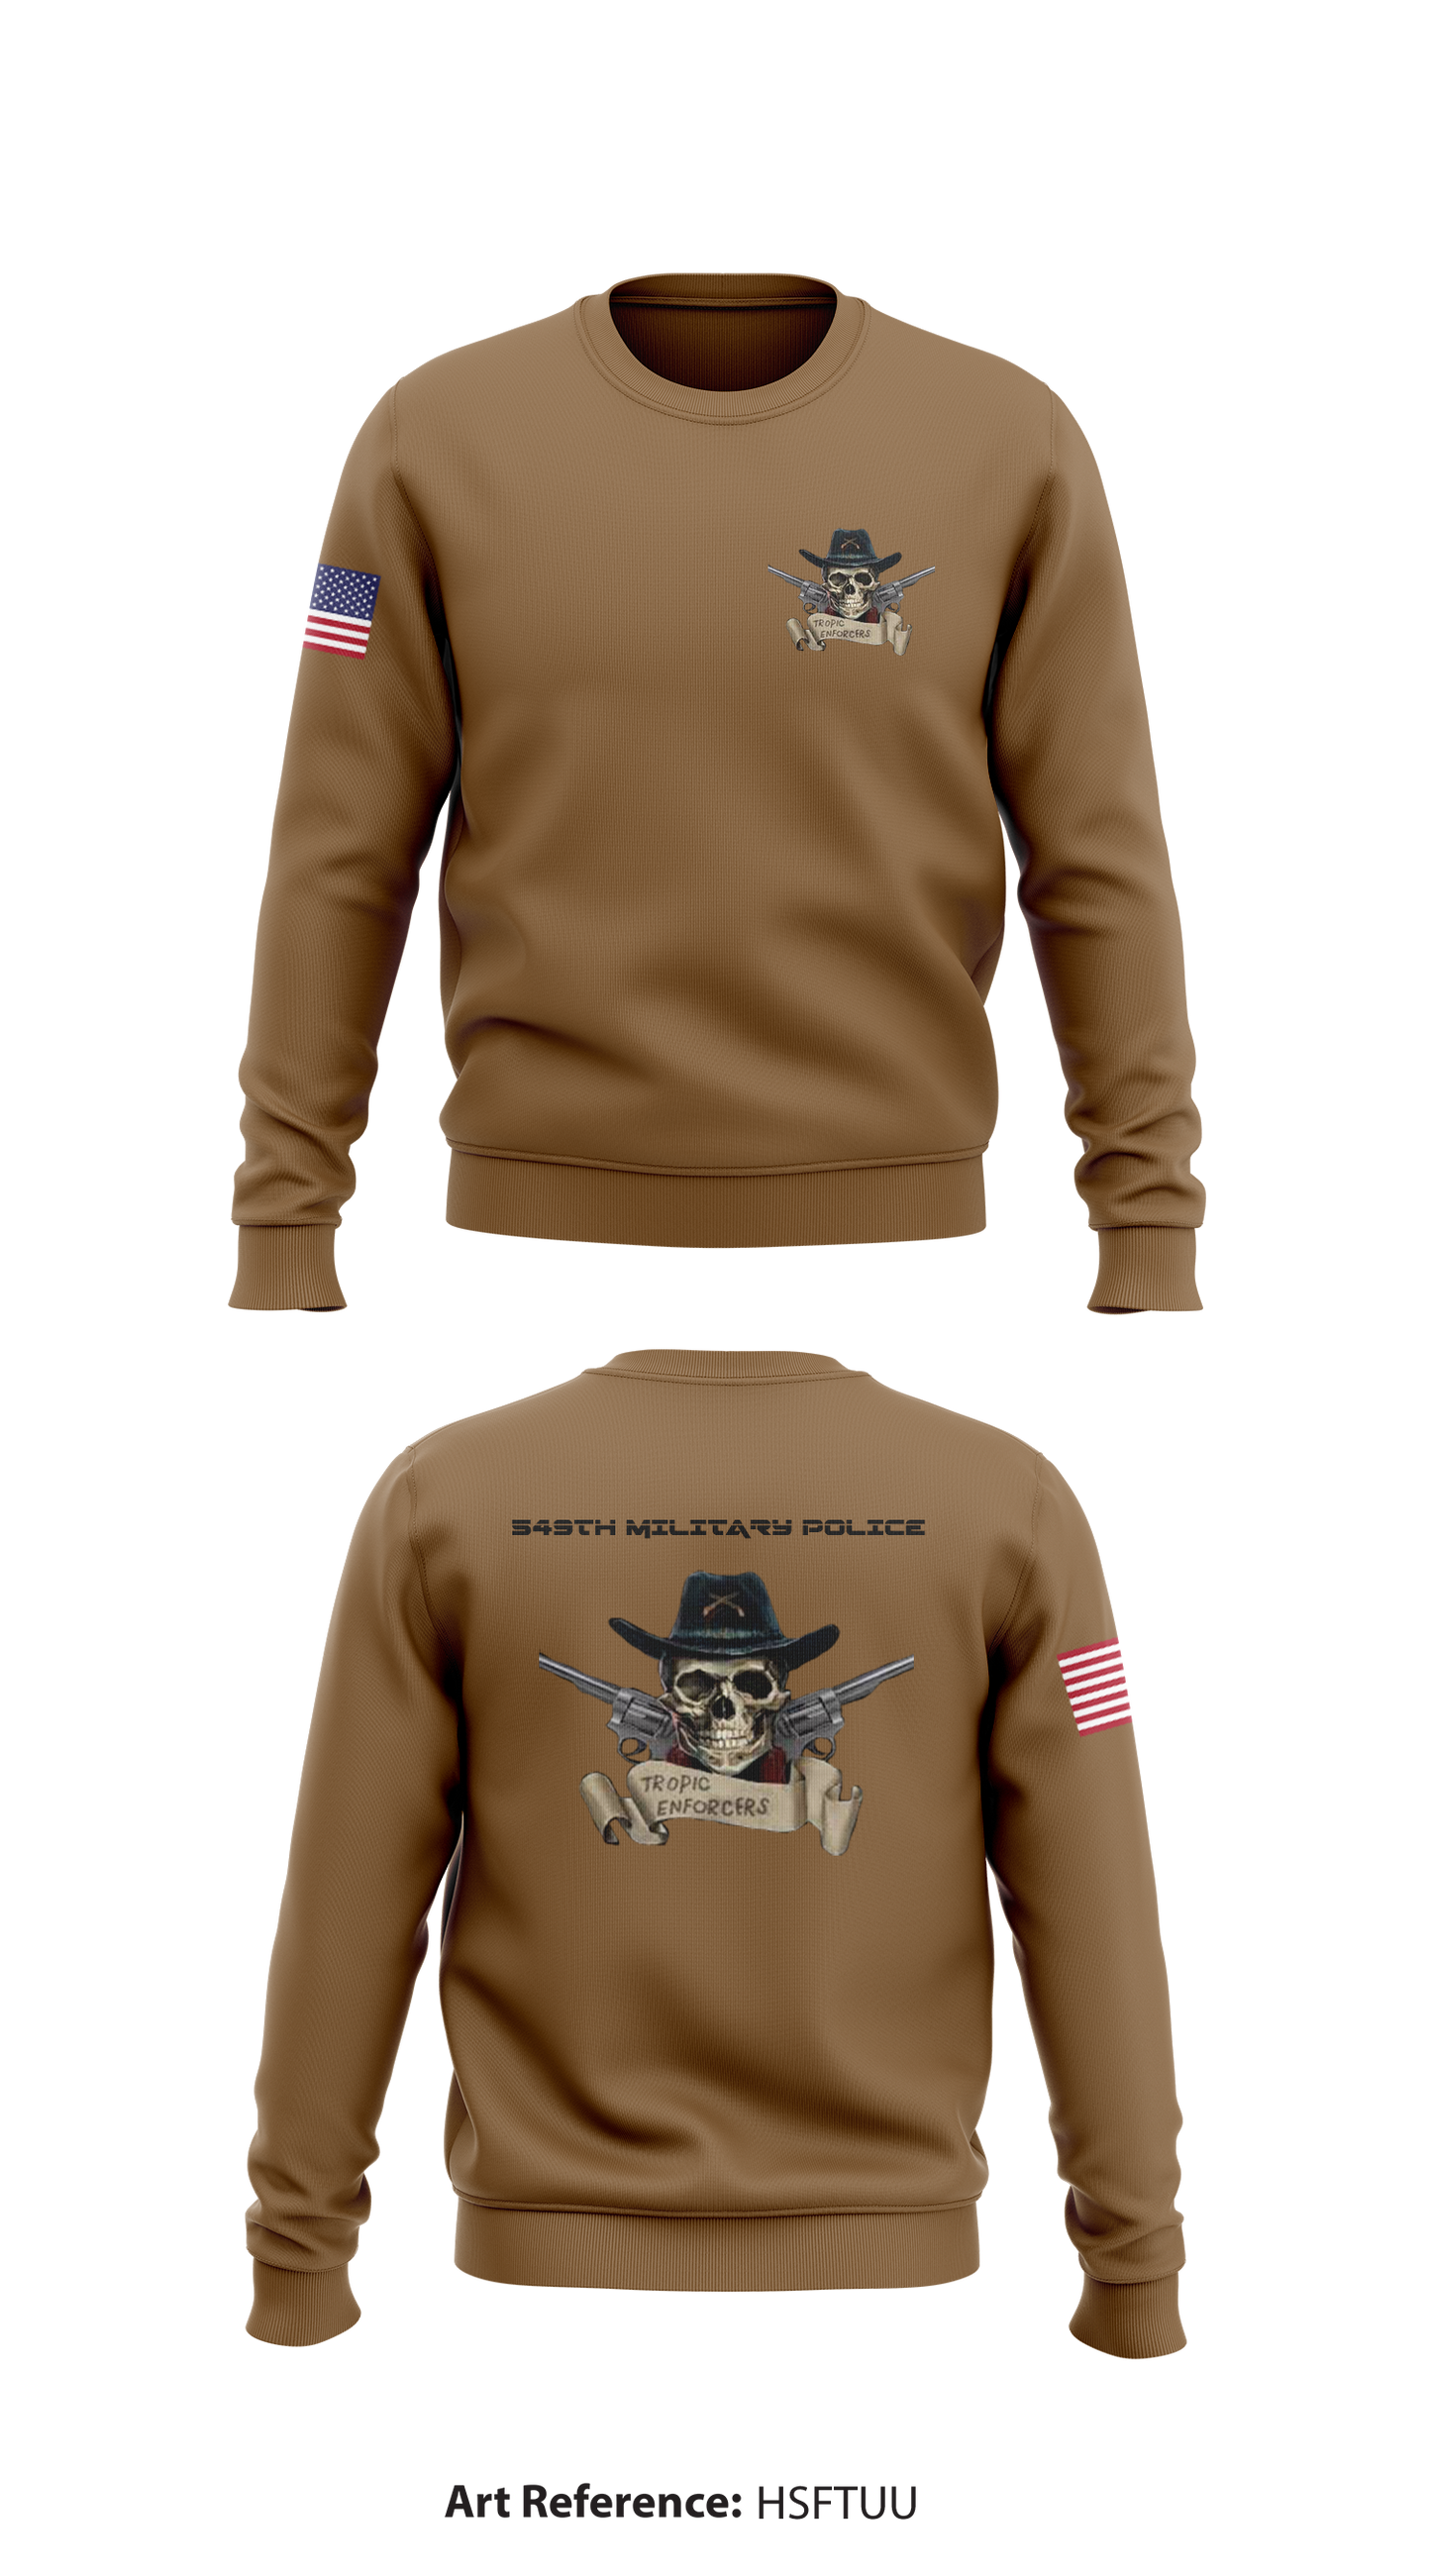 549th military police  Store 1 Core Men's Crewneck Performance Sweatshirt - hsFtuU